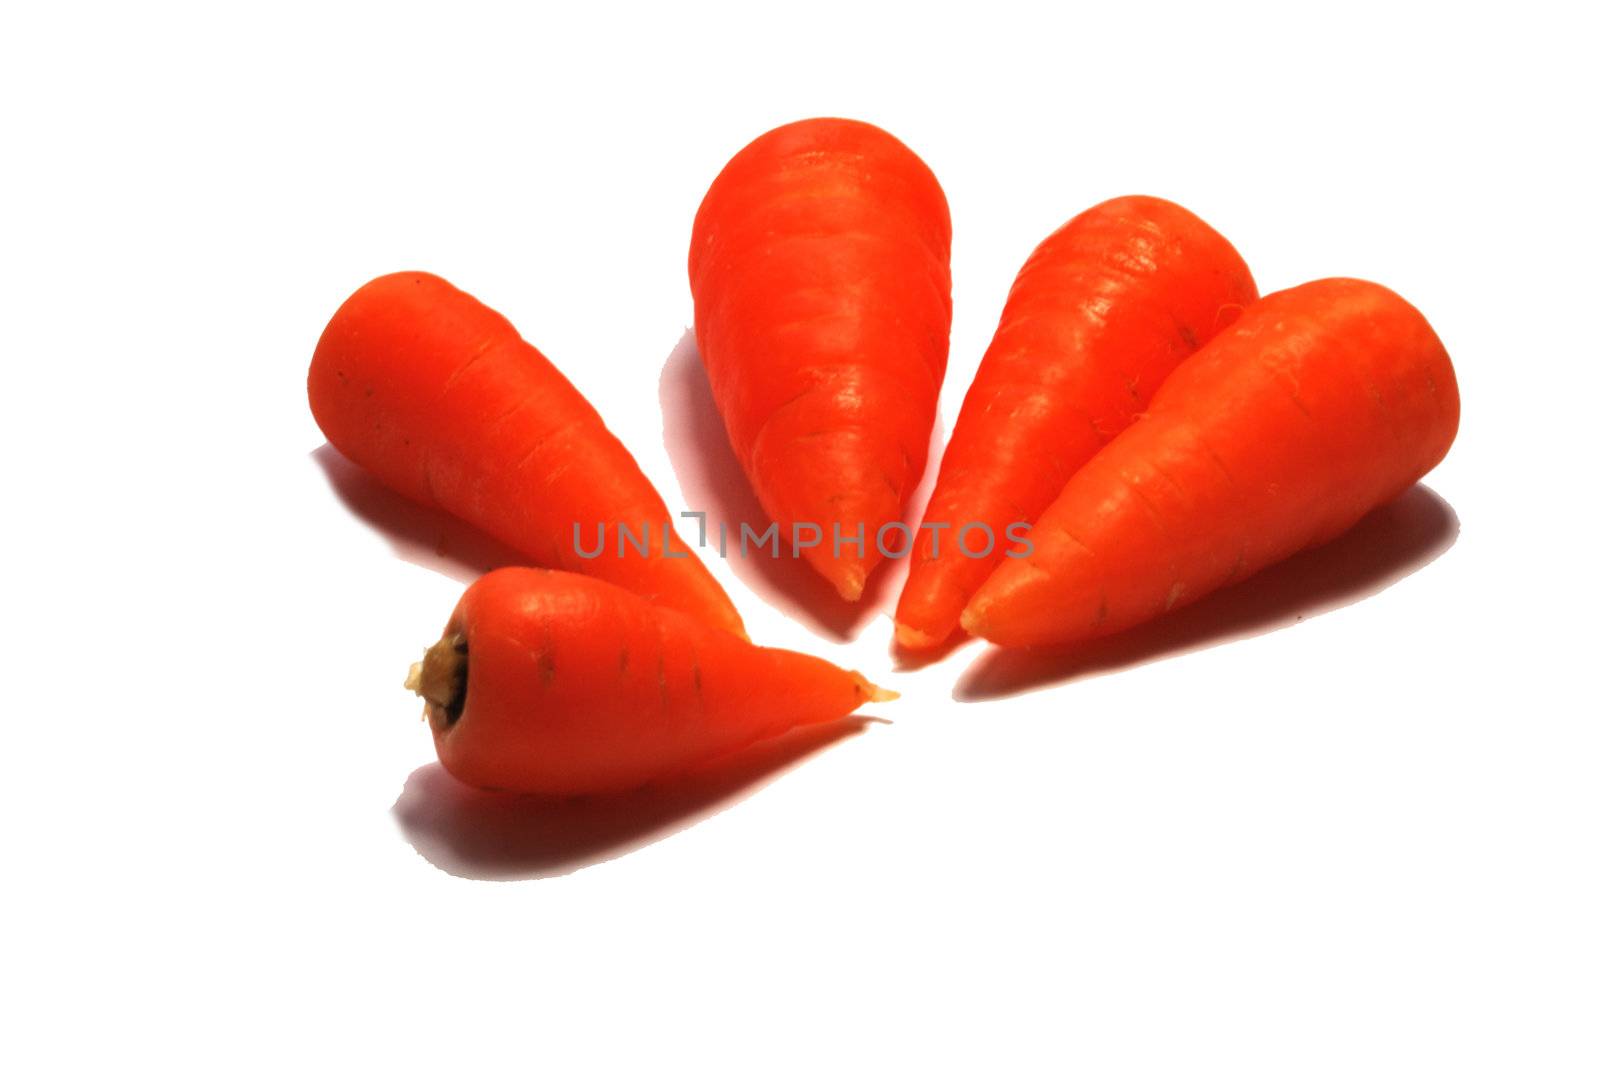 Raw baby carrots